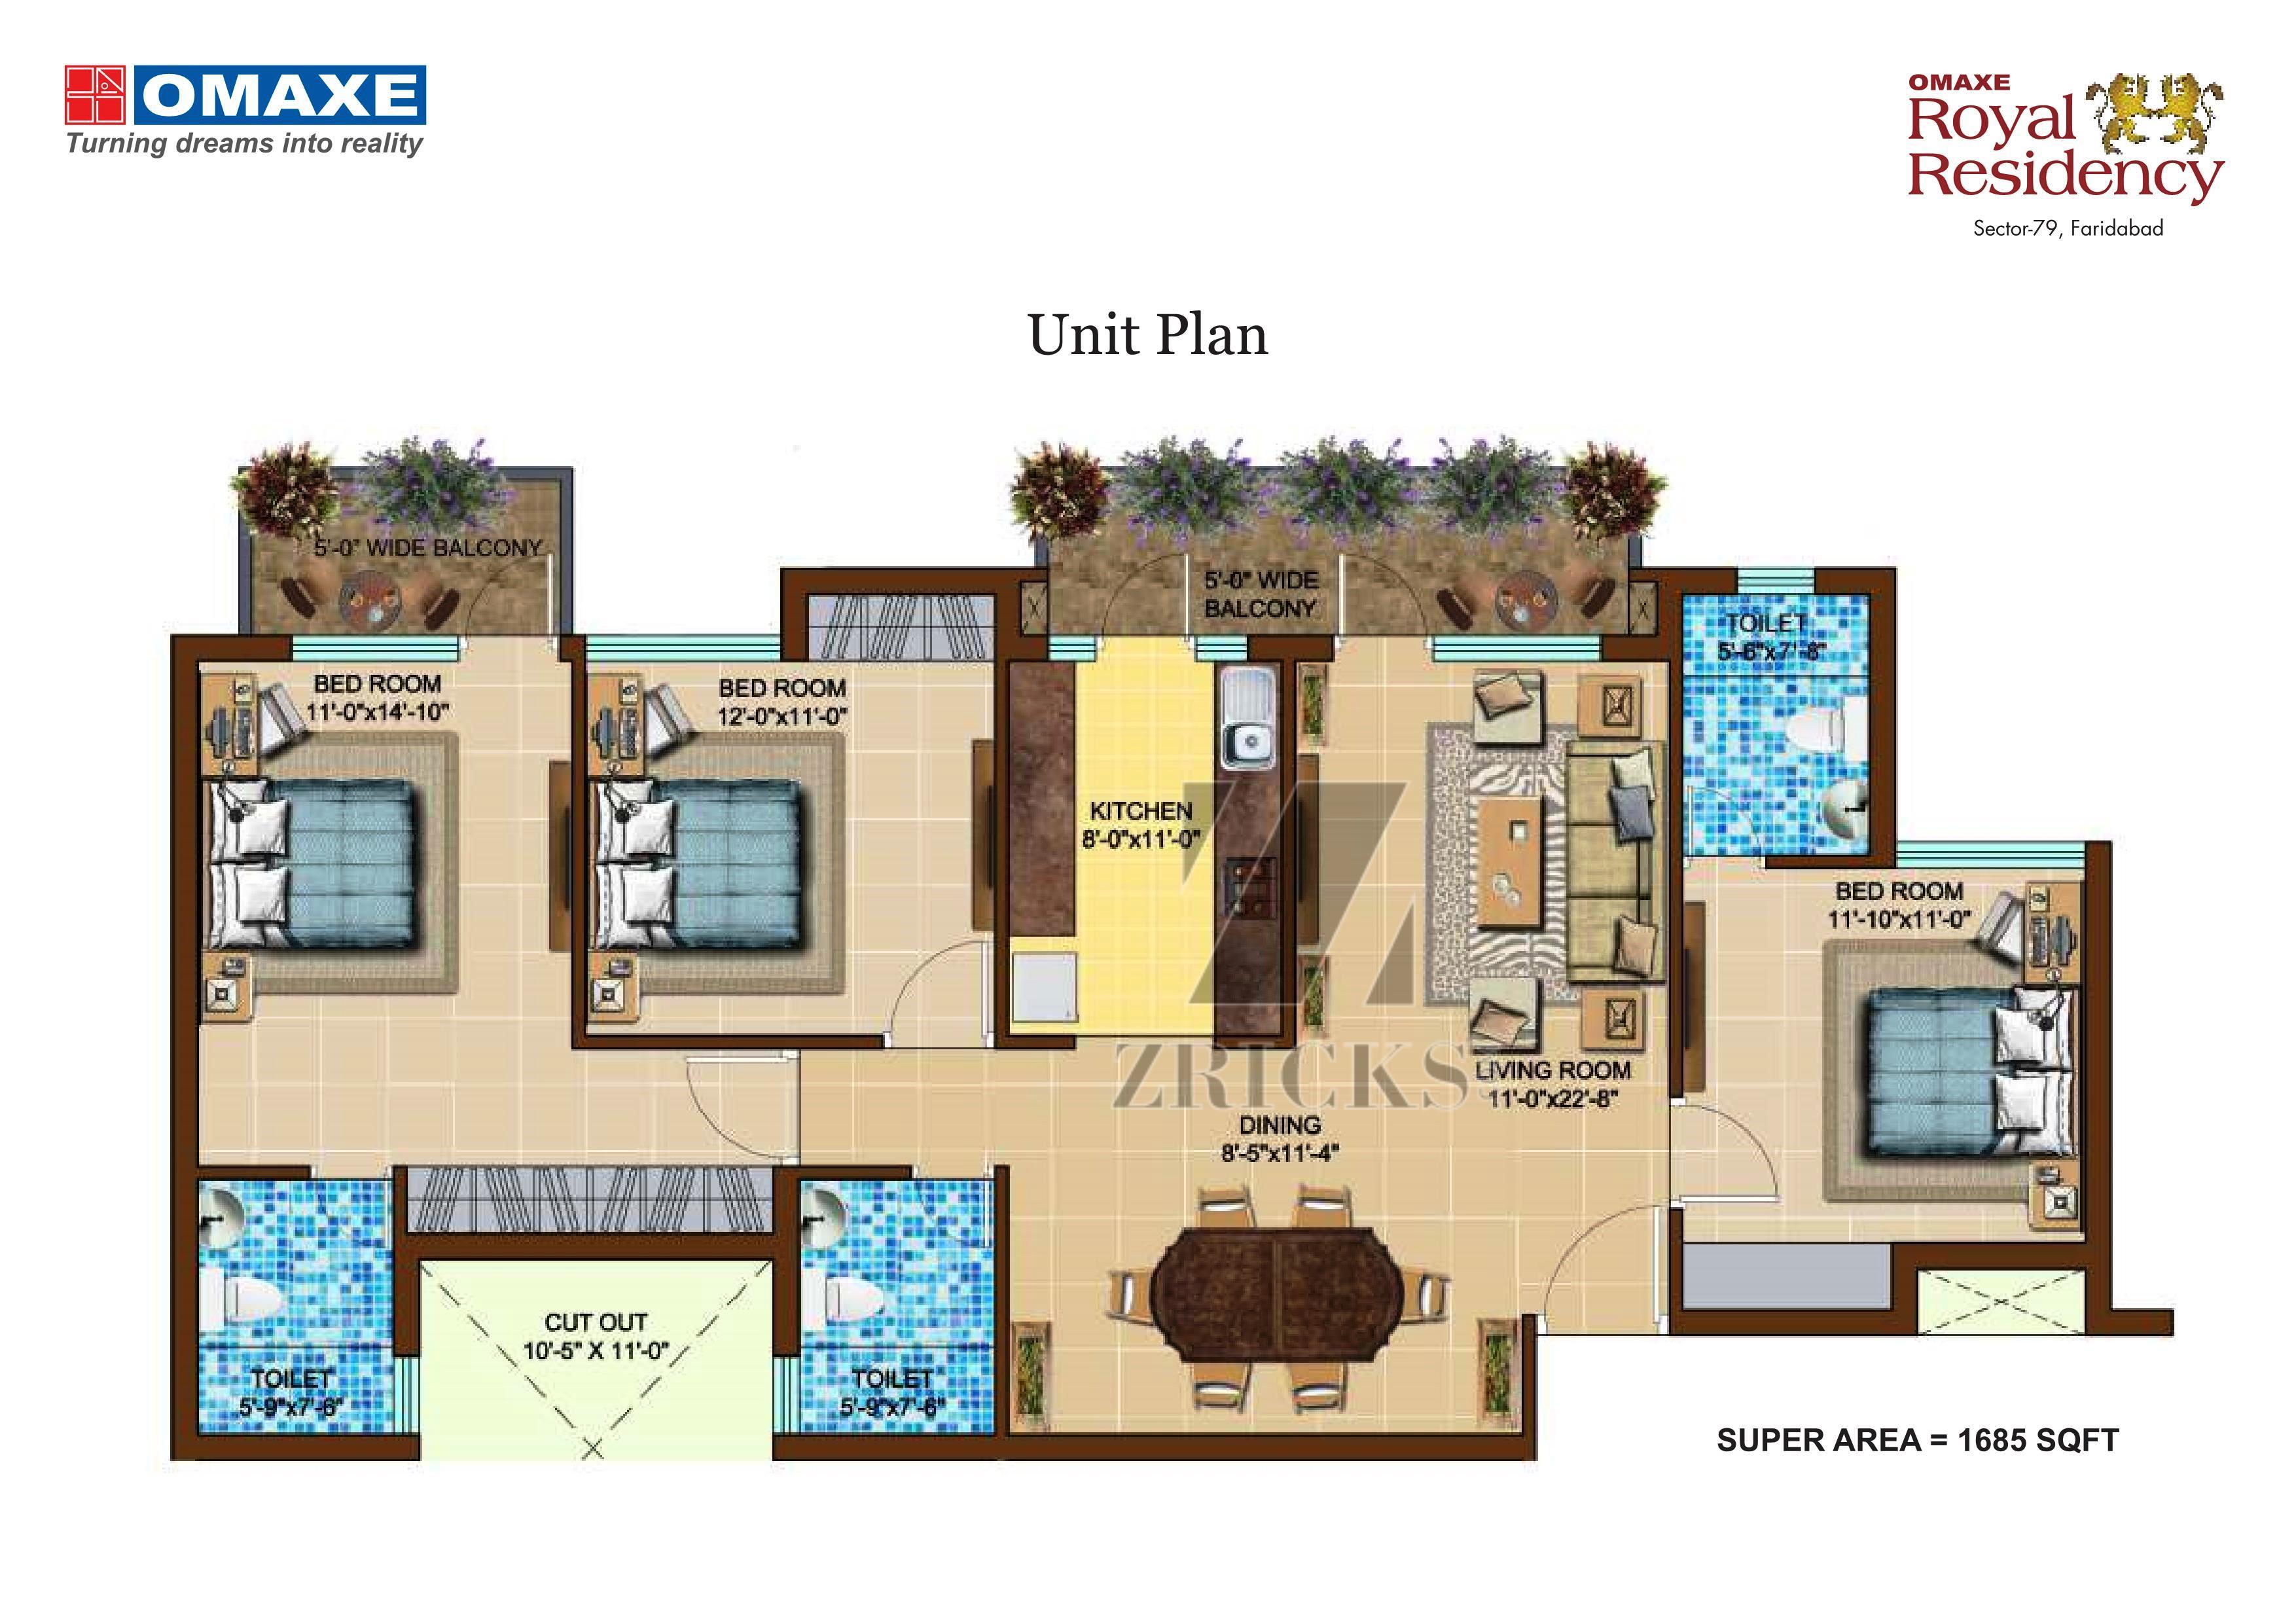 Omaxe Royal Residency Floor Plan